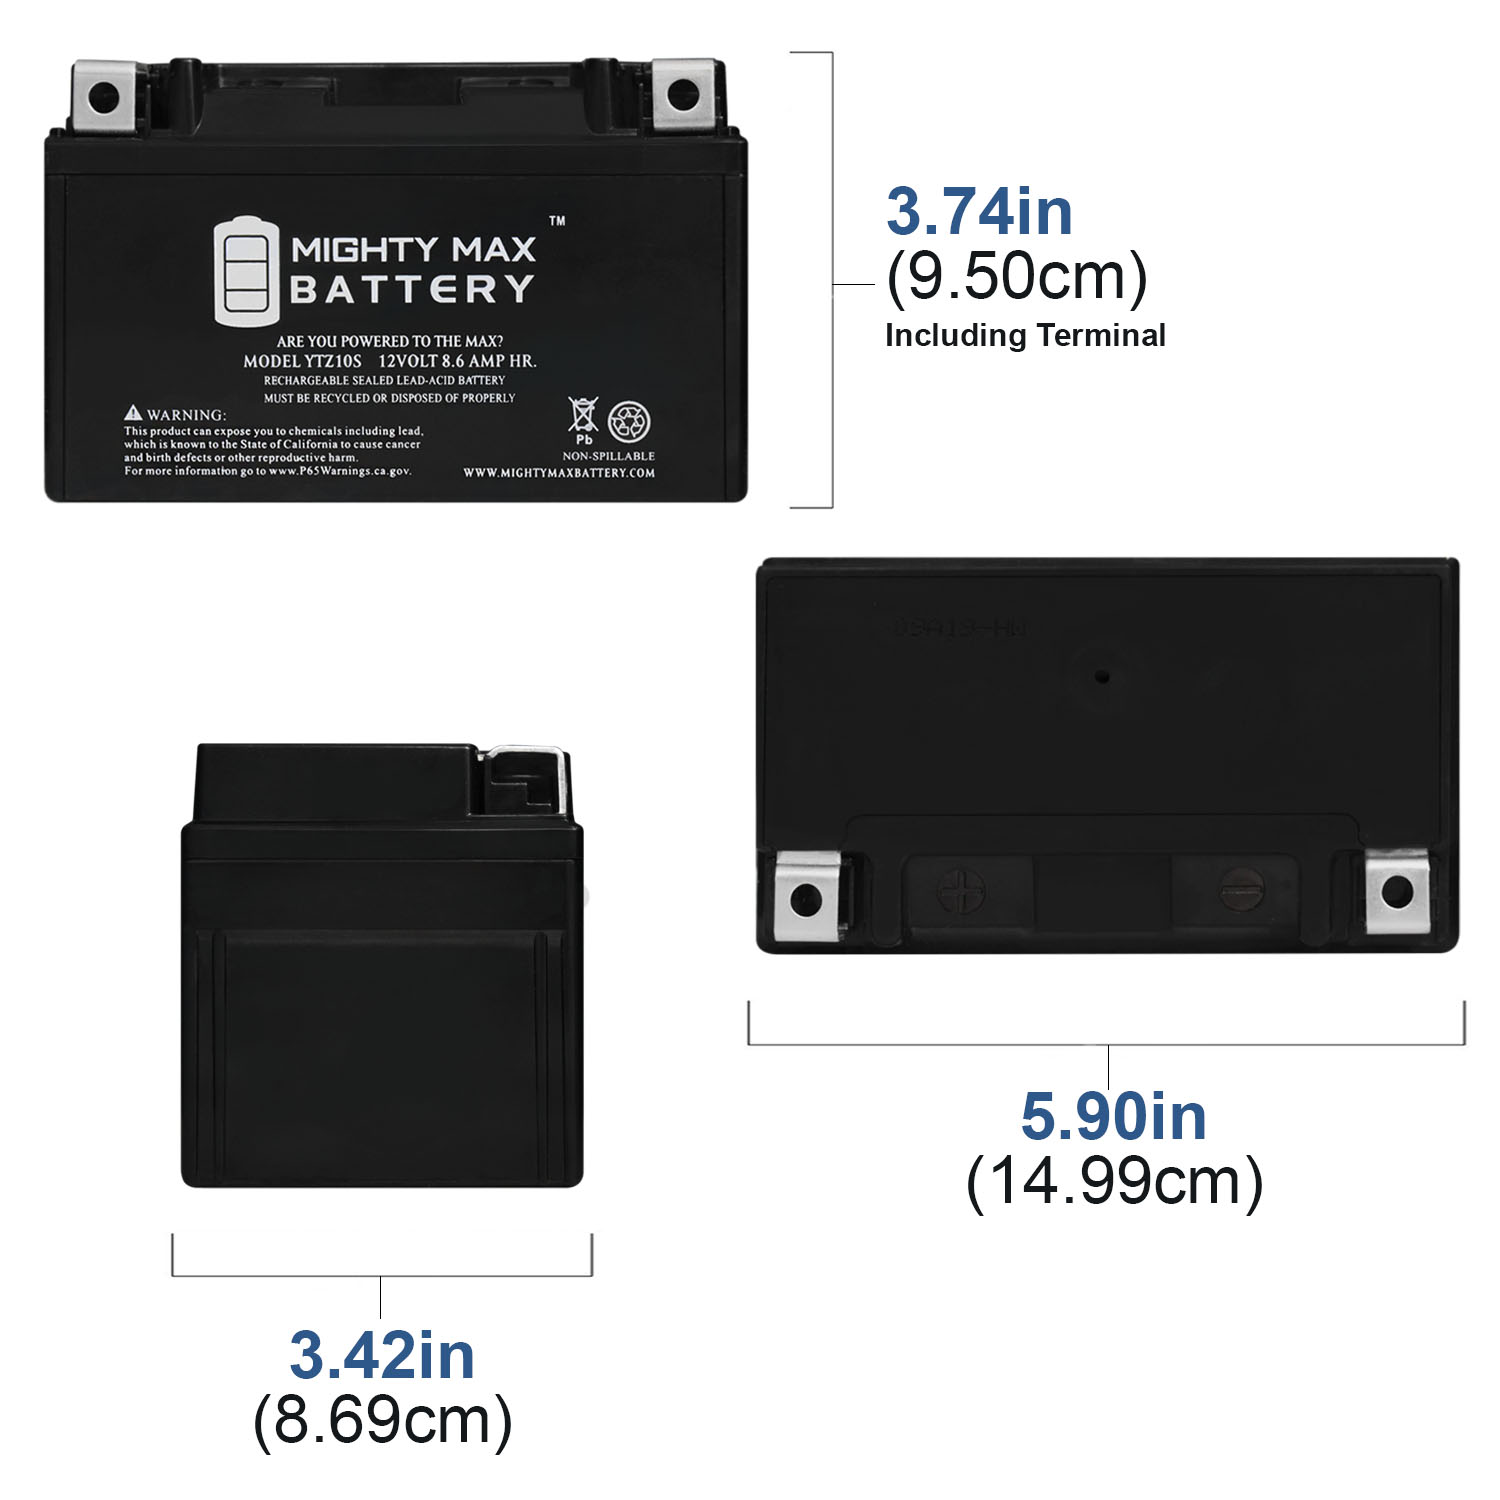 Batterie Kyoto YTX9-BS SLA AGM